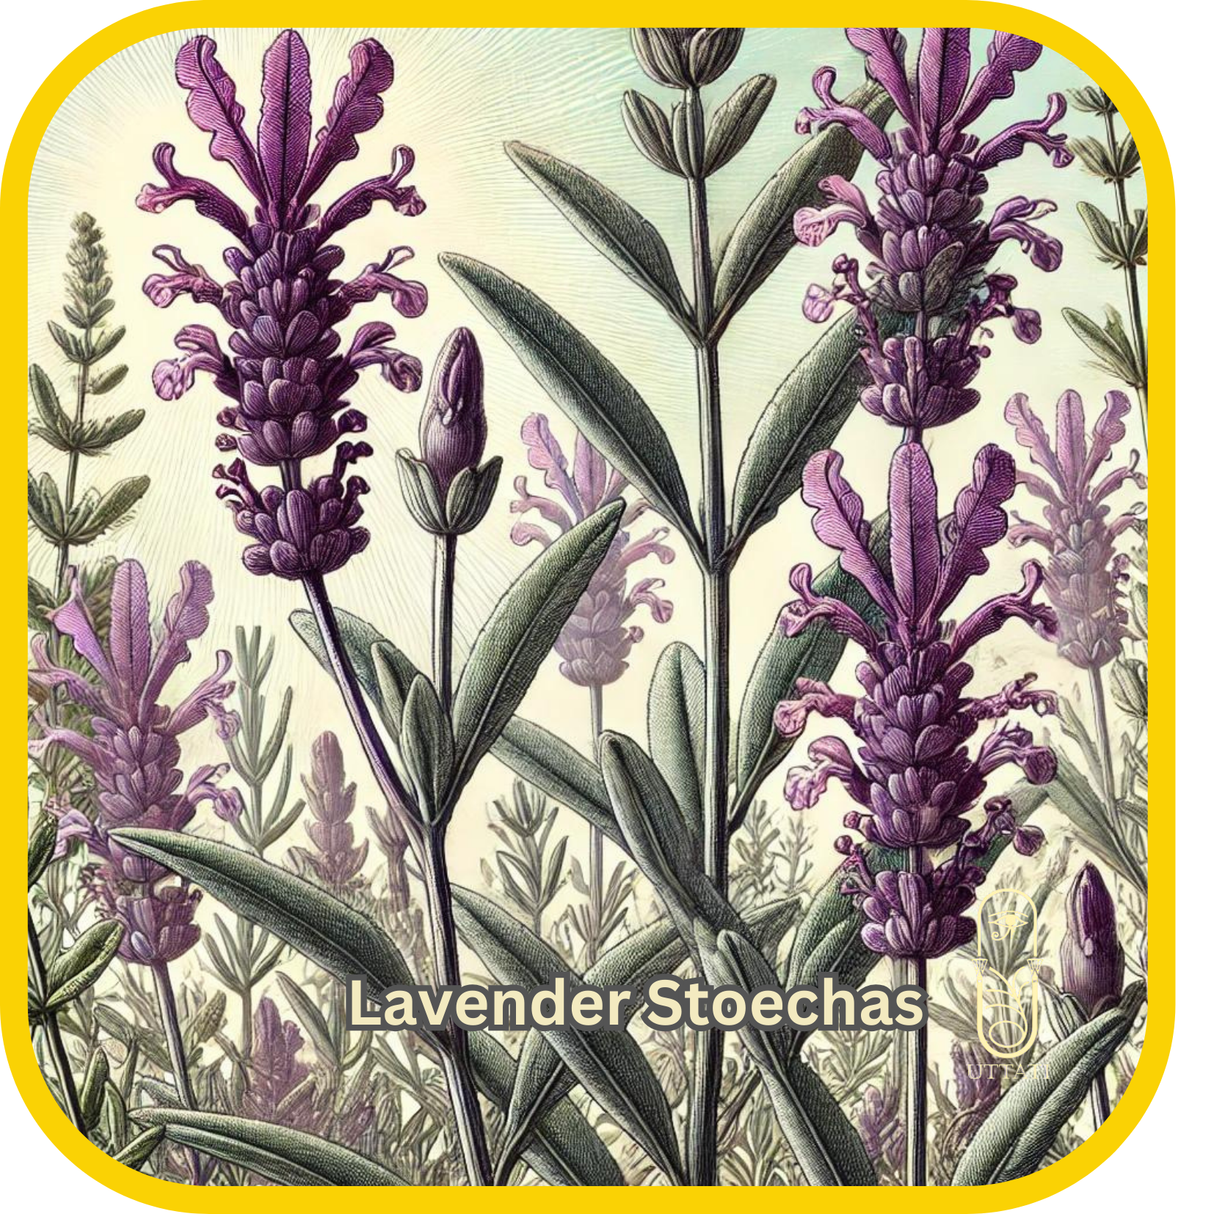 Lavender Stoechas